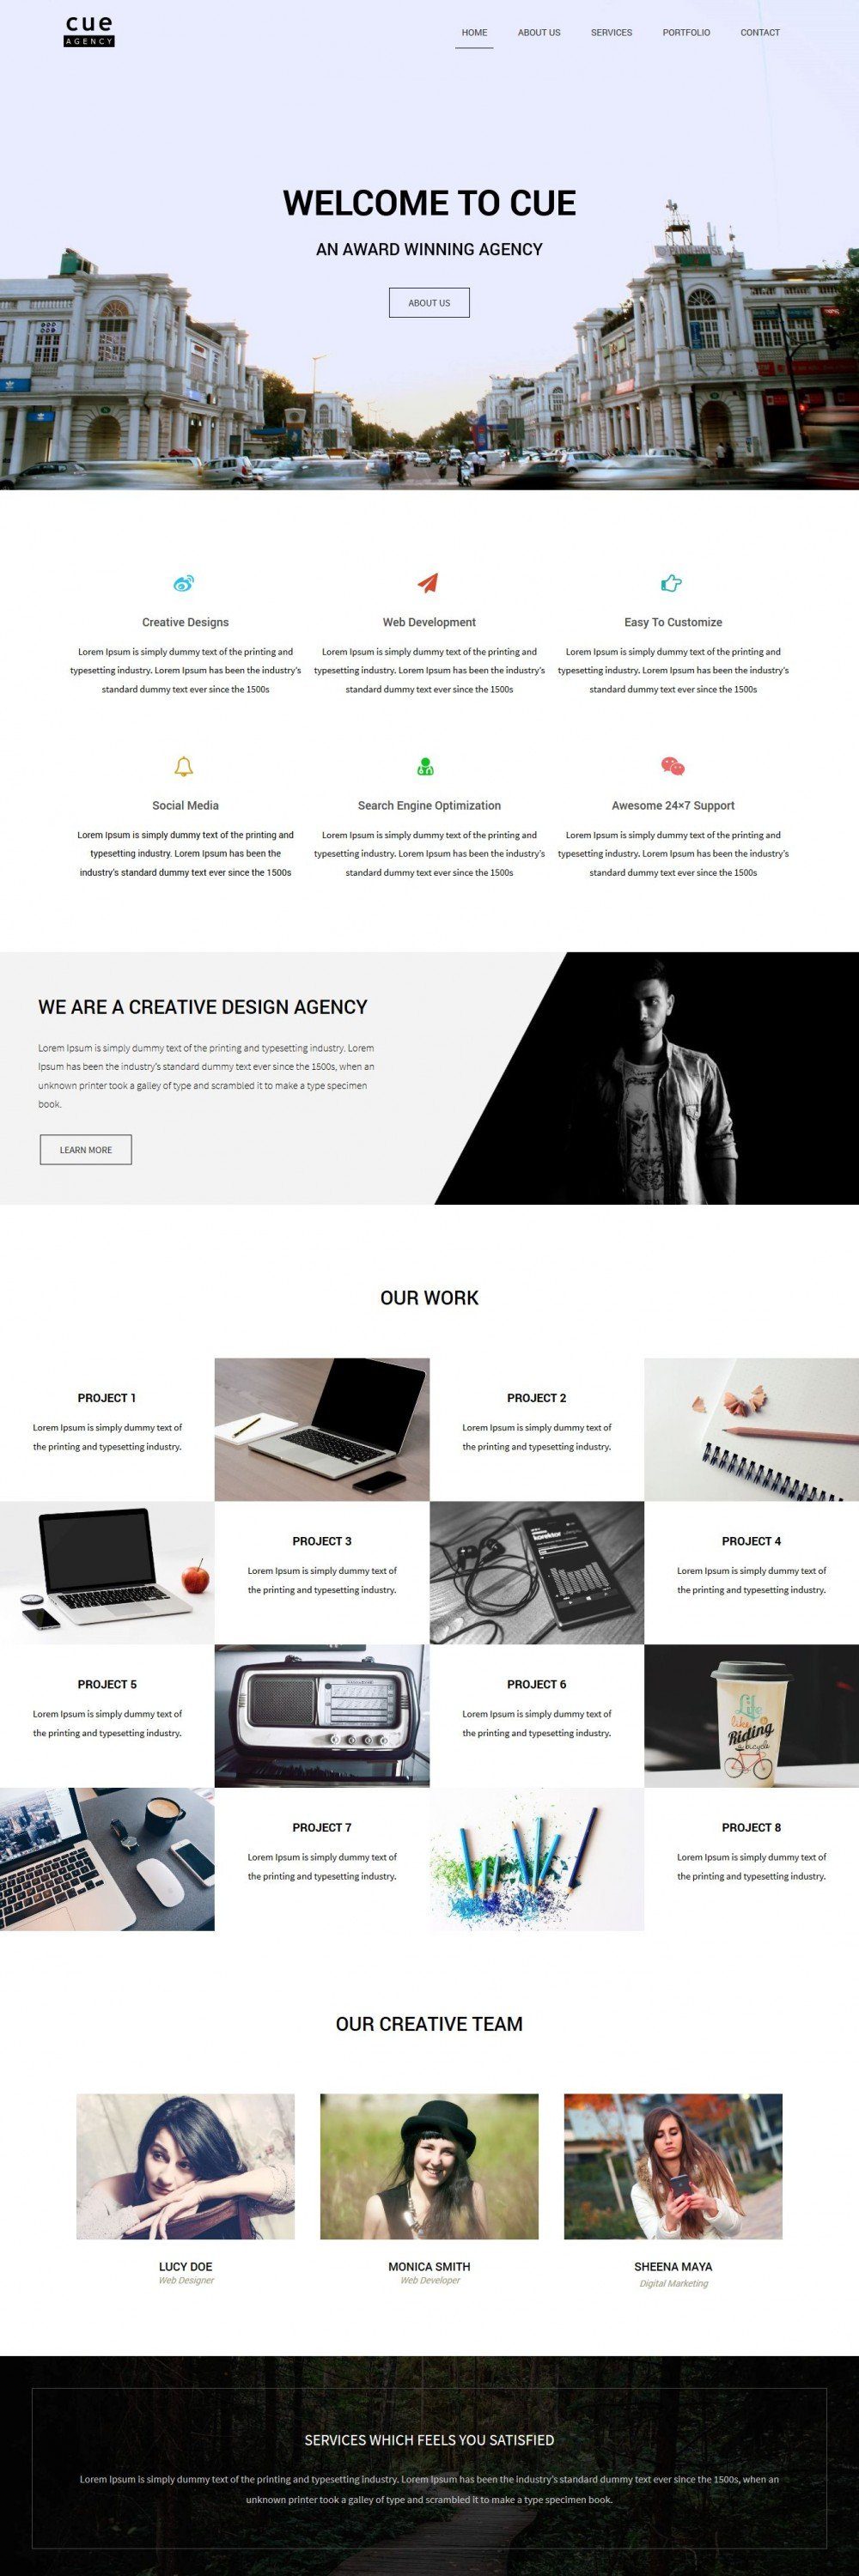 Free Cue Creative Web Design Agency Drupal Theme